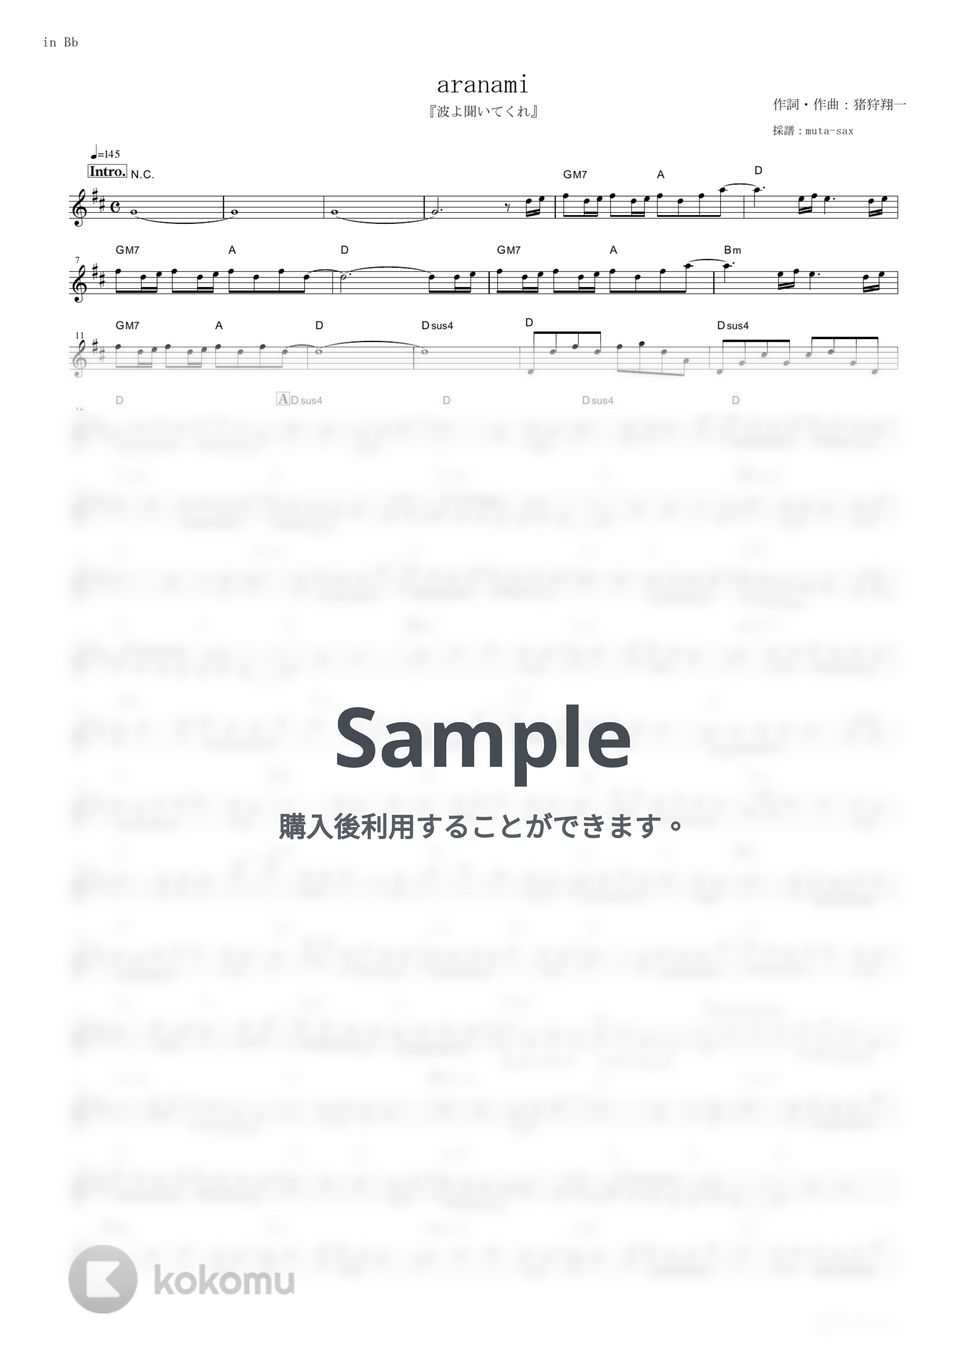 tacica - aranami (『波よ聞いてくれ』 / in Bb) by muta-sax